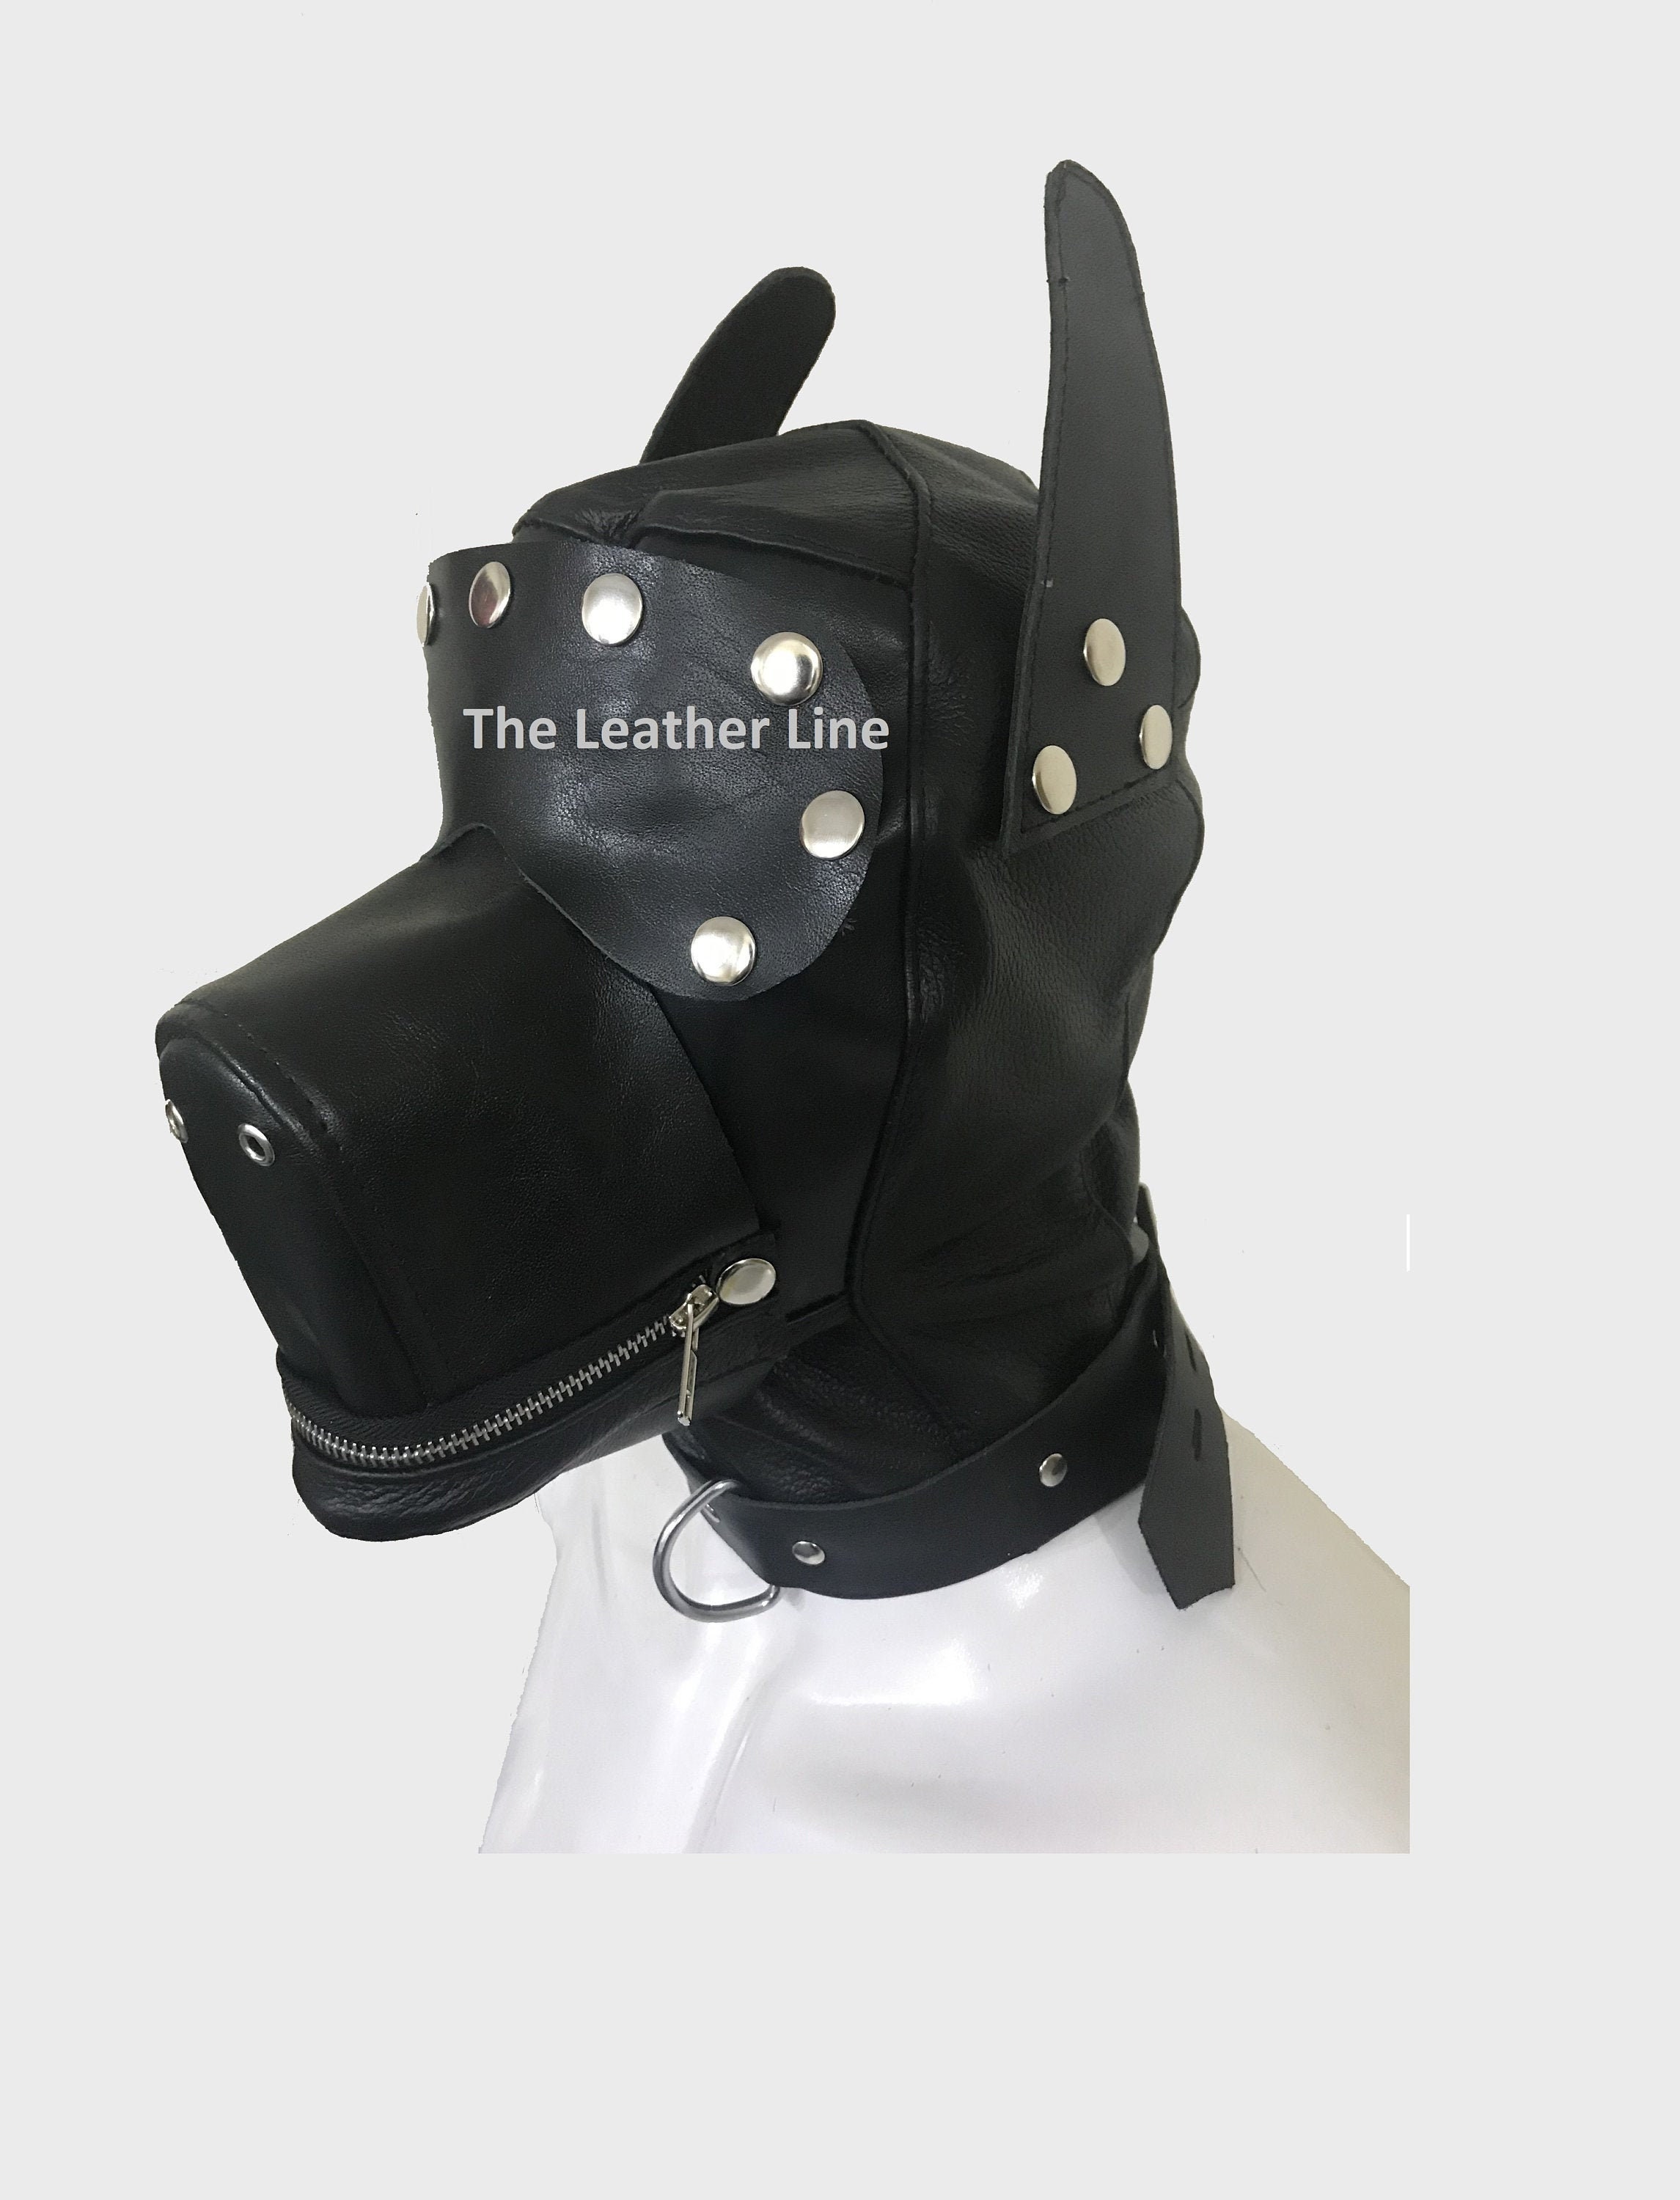 Cow Hide Leather Bondage Dog Mask Hood with Mouth Gag & Blindfold Restraint 